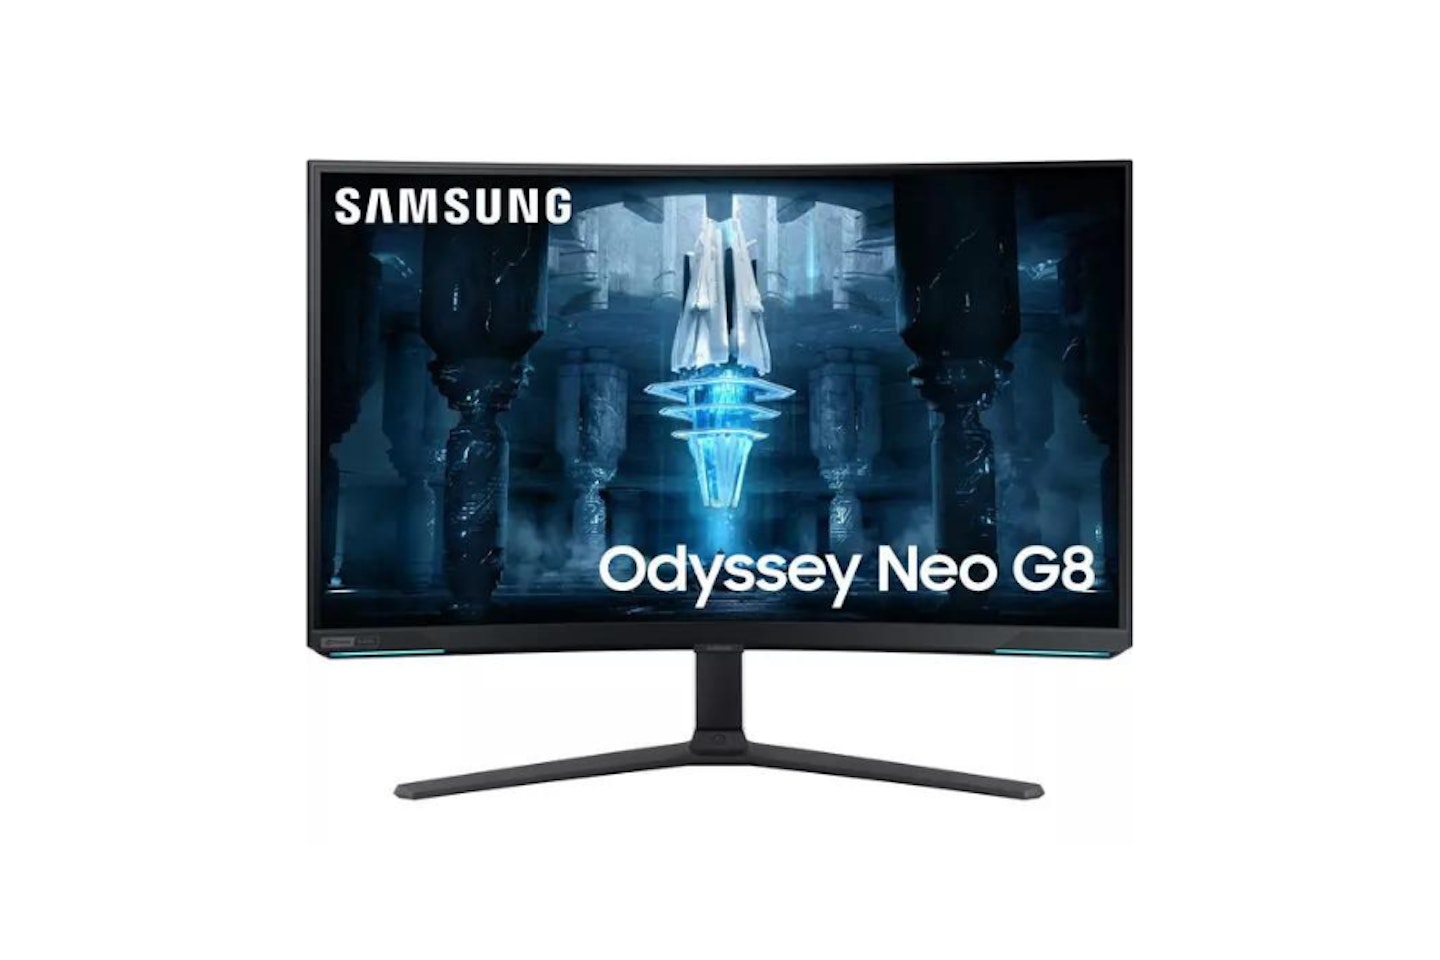 SAMSUNG Odyssey Neo G8 4K Ultra HD 32" Curved Quantum Dot Gaming Monitor - Black & White